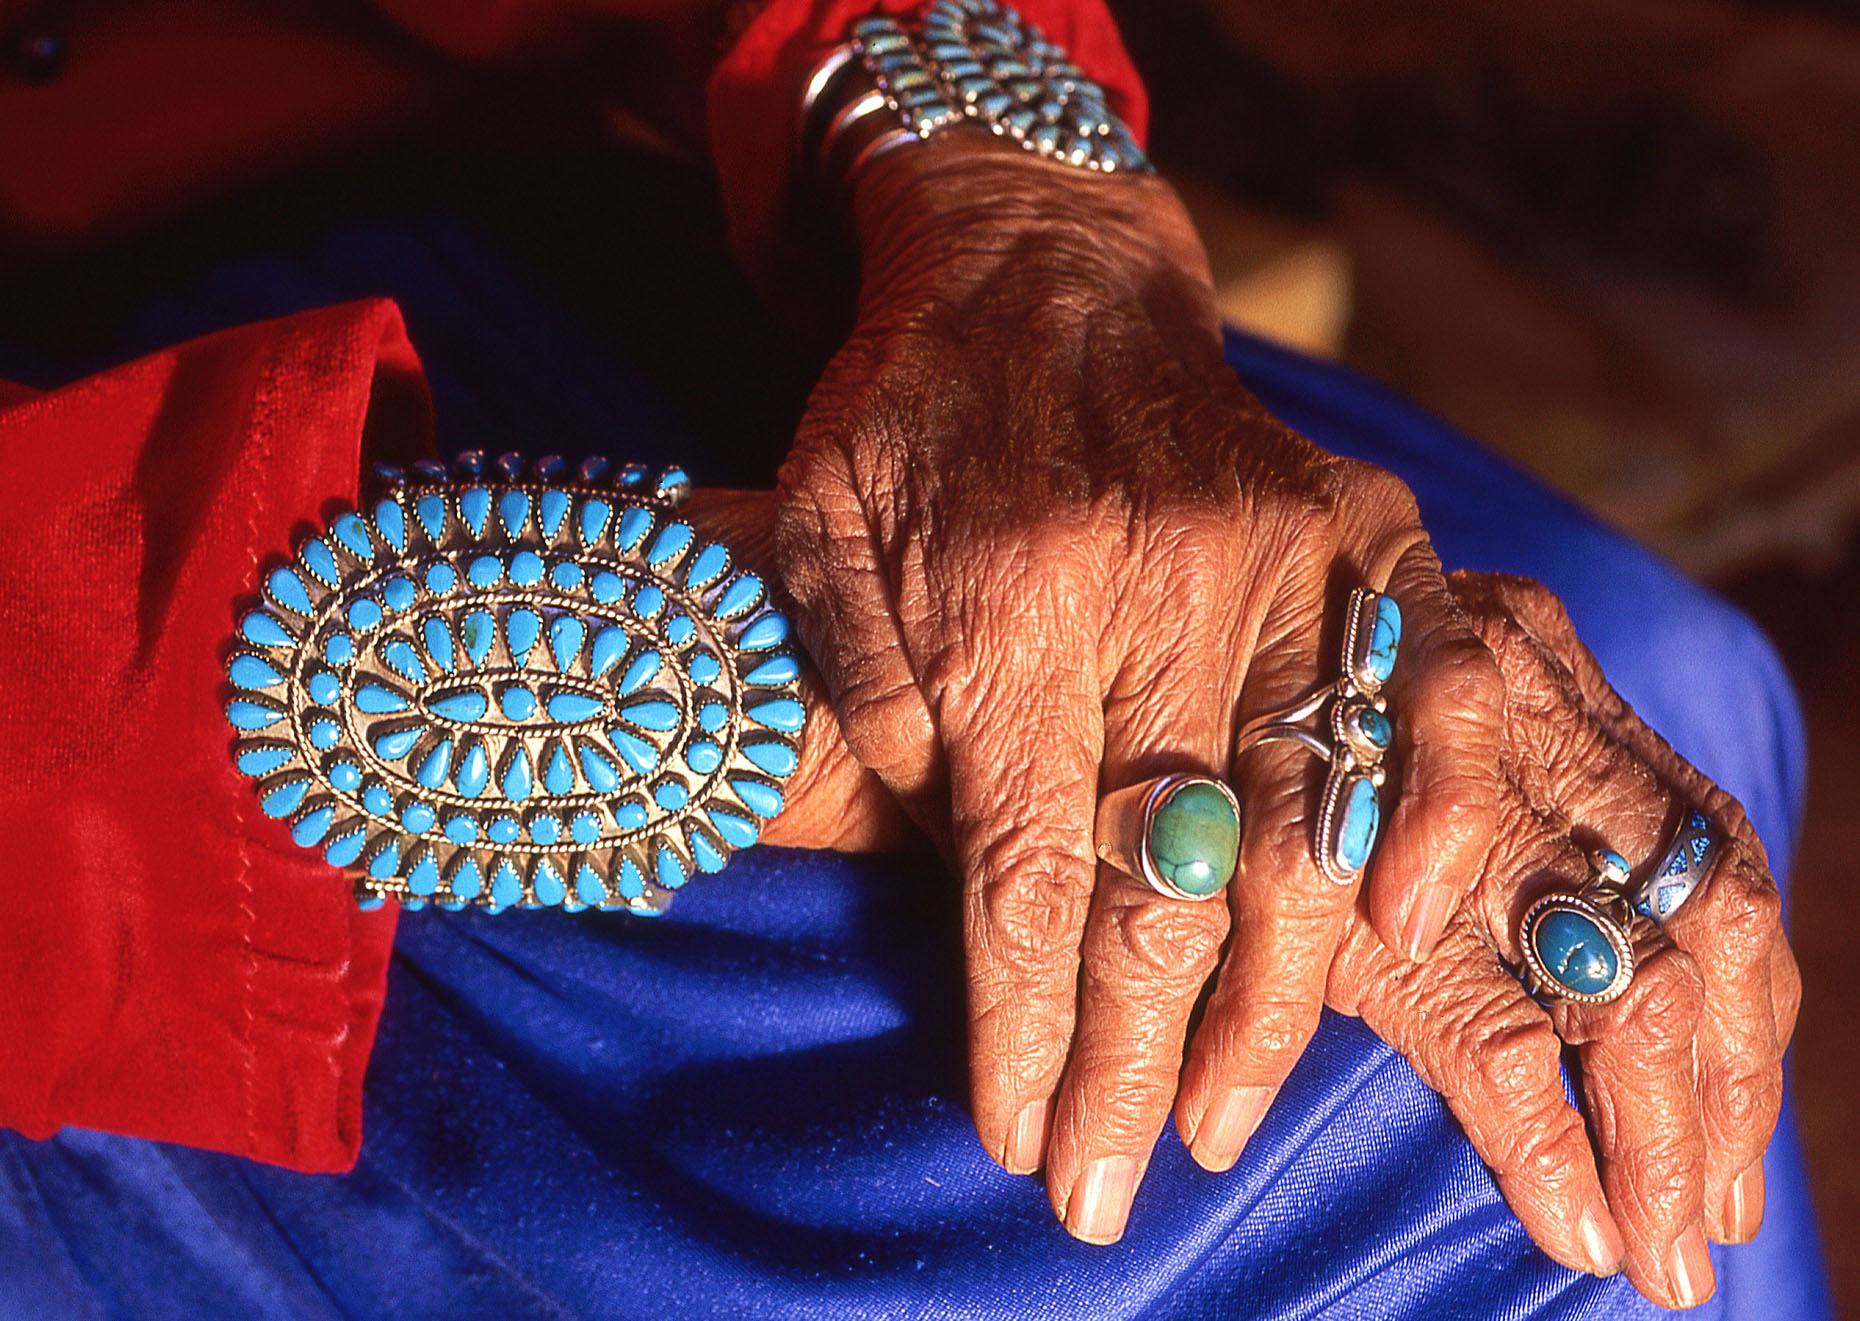 Jeweled hands of weaver and sheep herder Suzie Yazzie, John Annerino, Native American traditions, Rain God Mesa, Monument Valley Navajo Tribal Park, Arizona-Utah